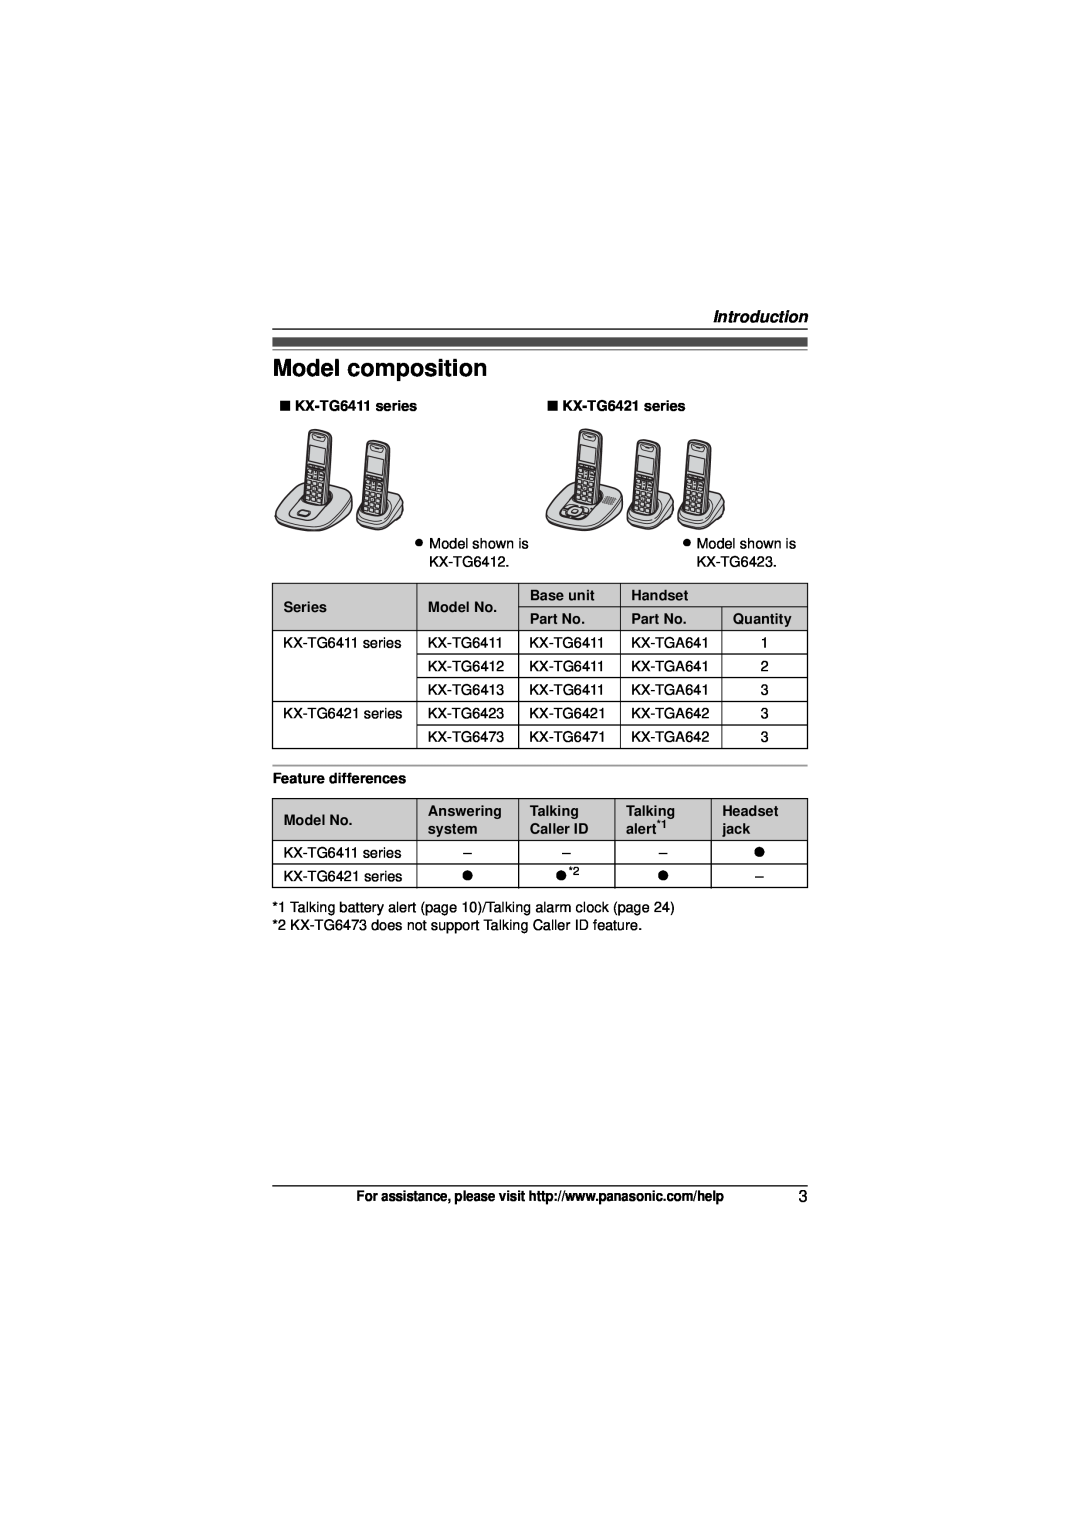 Panasonic KX-TG6412 Model composition, Introduction, KX-TG6411 series, Series, Model No, Base unit, Handset, Answering 